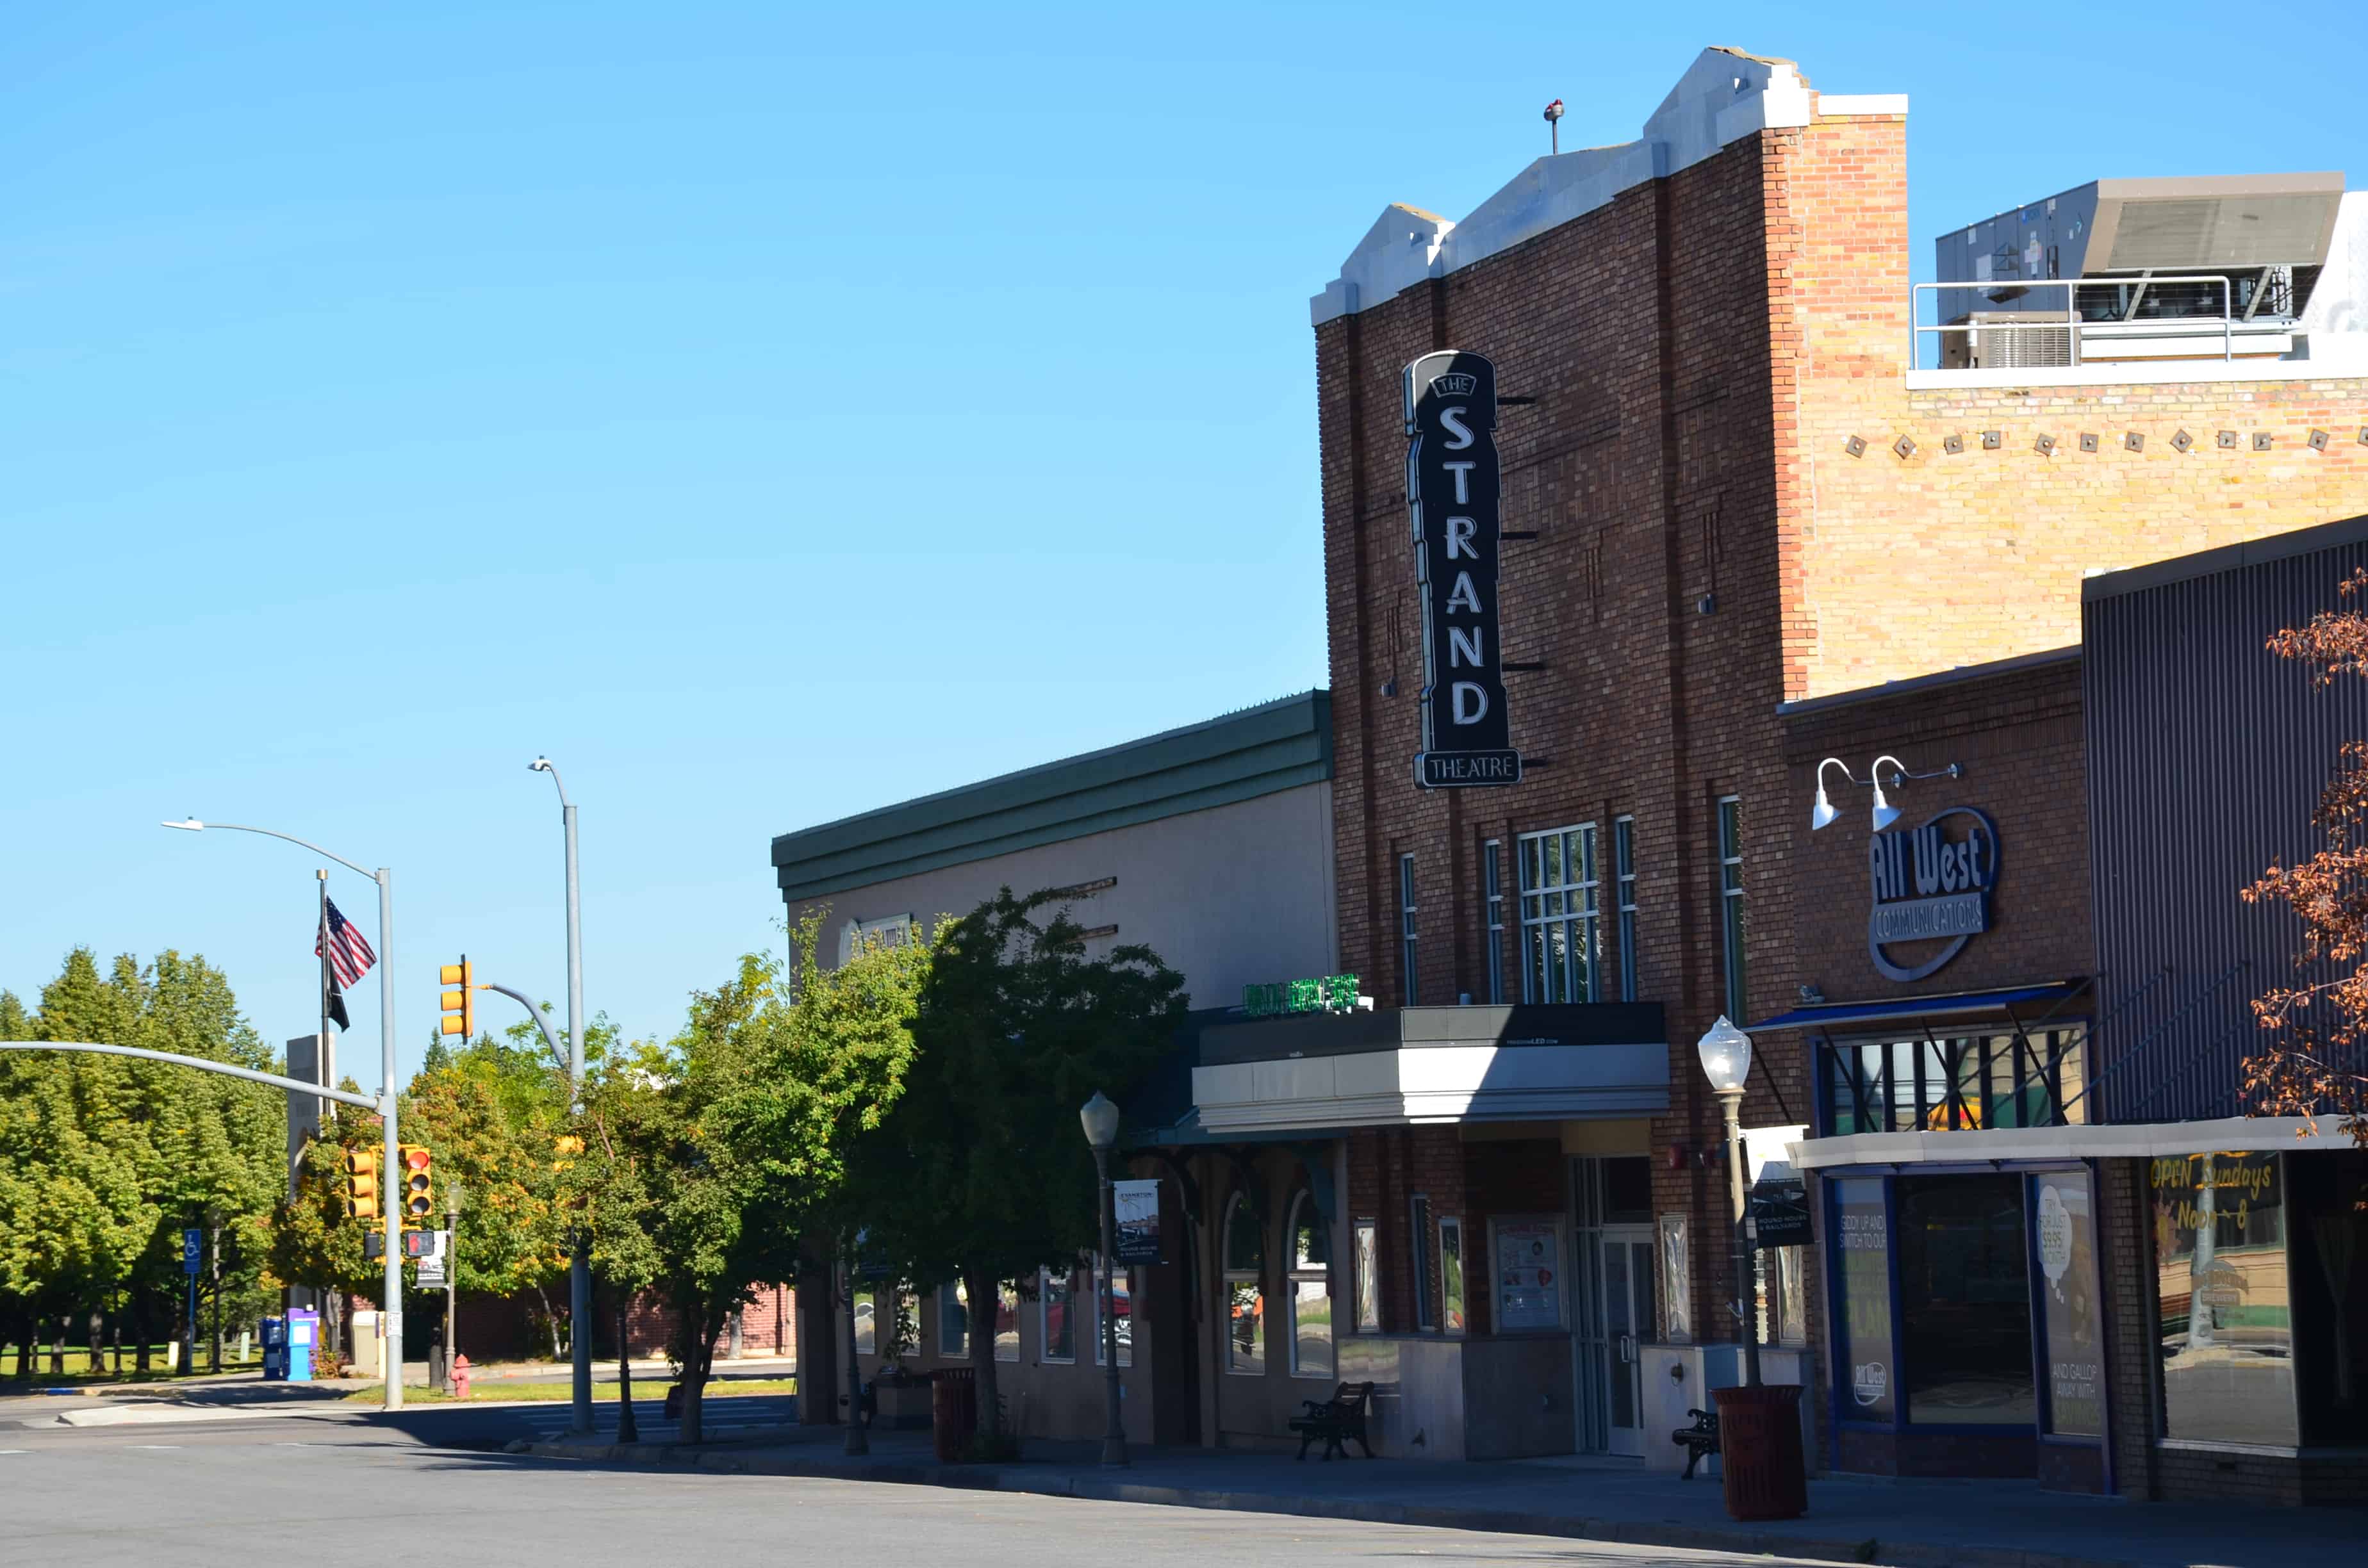 Strand Theatre in Evanston, Wyoming